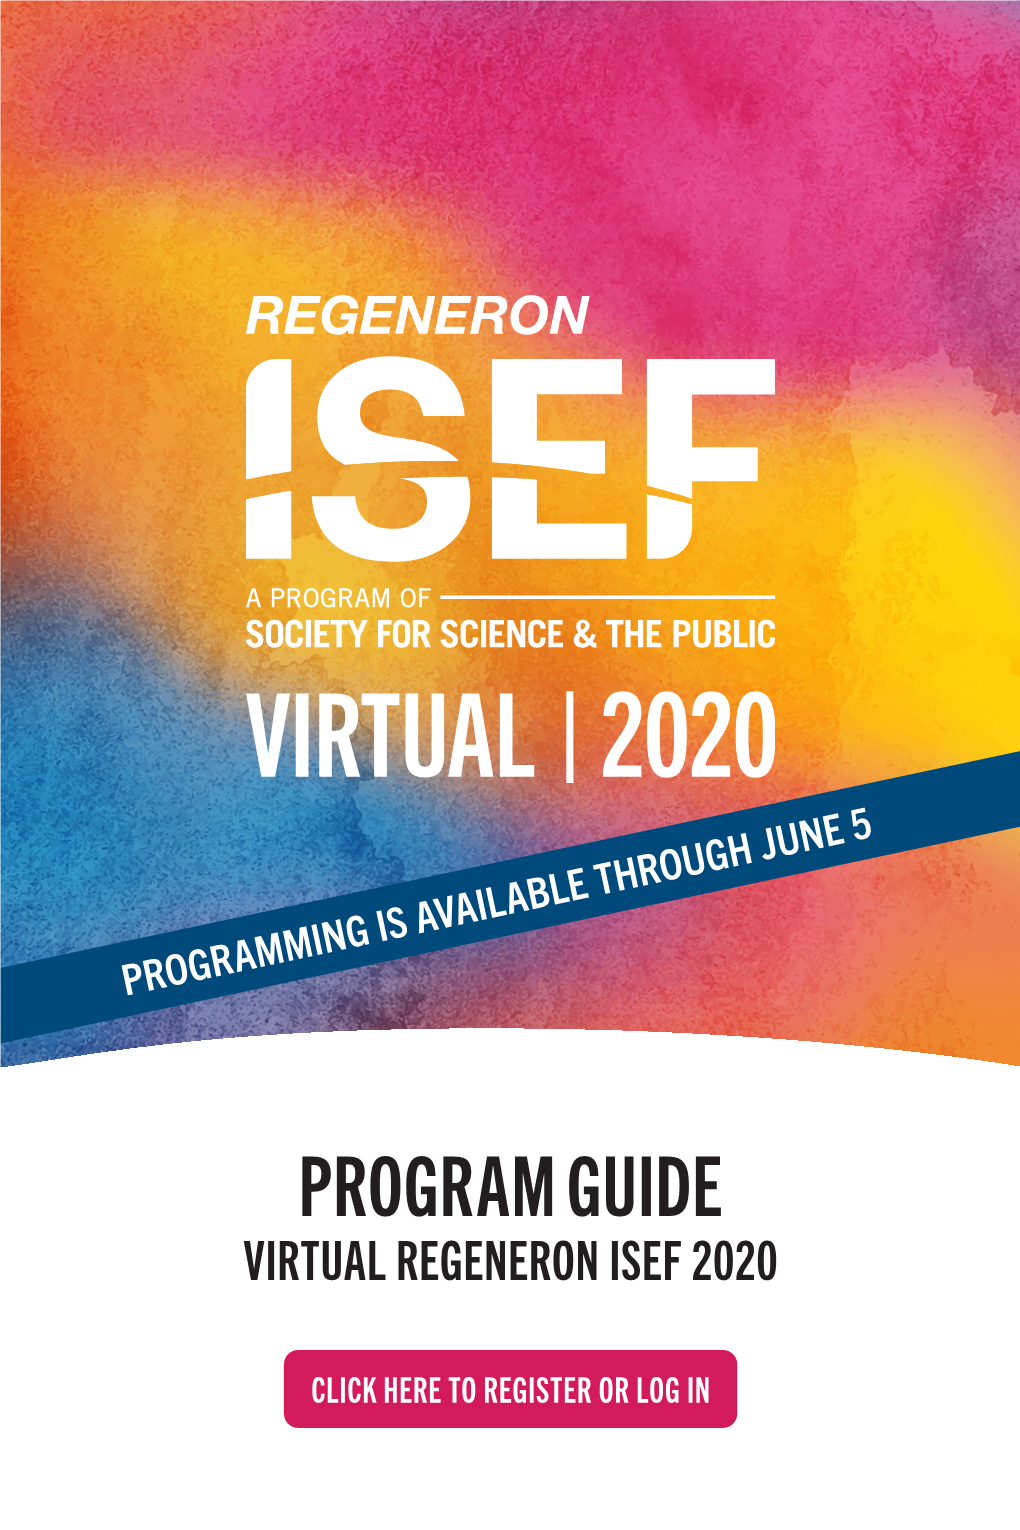 Program Guide Virtual Regeneron Isef 2020